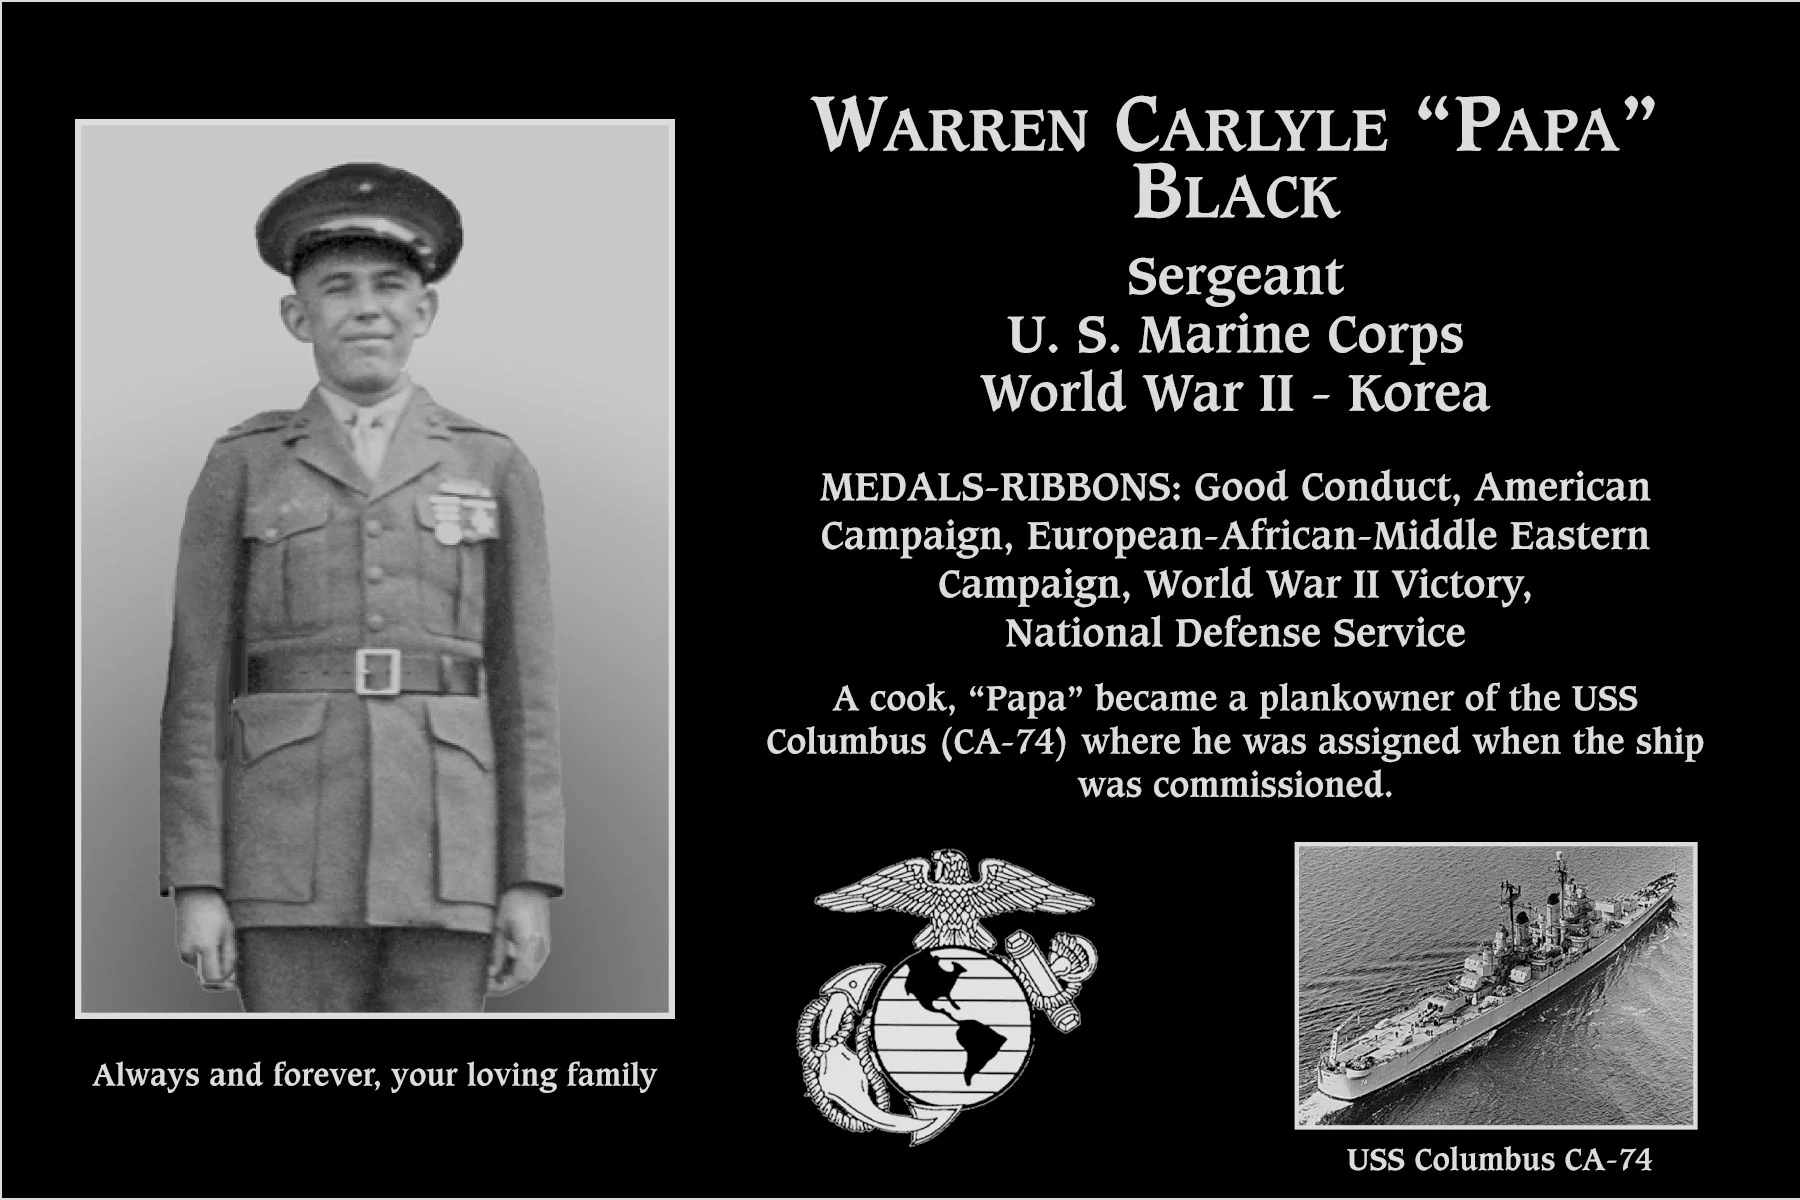 Warren Carlyle “Papa” Black